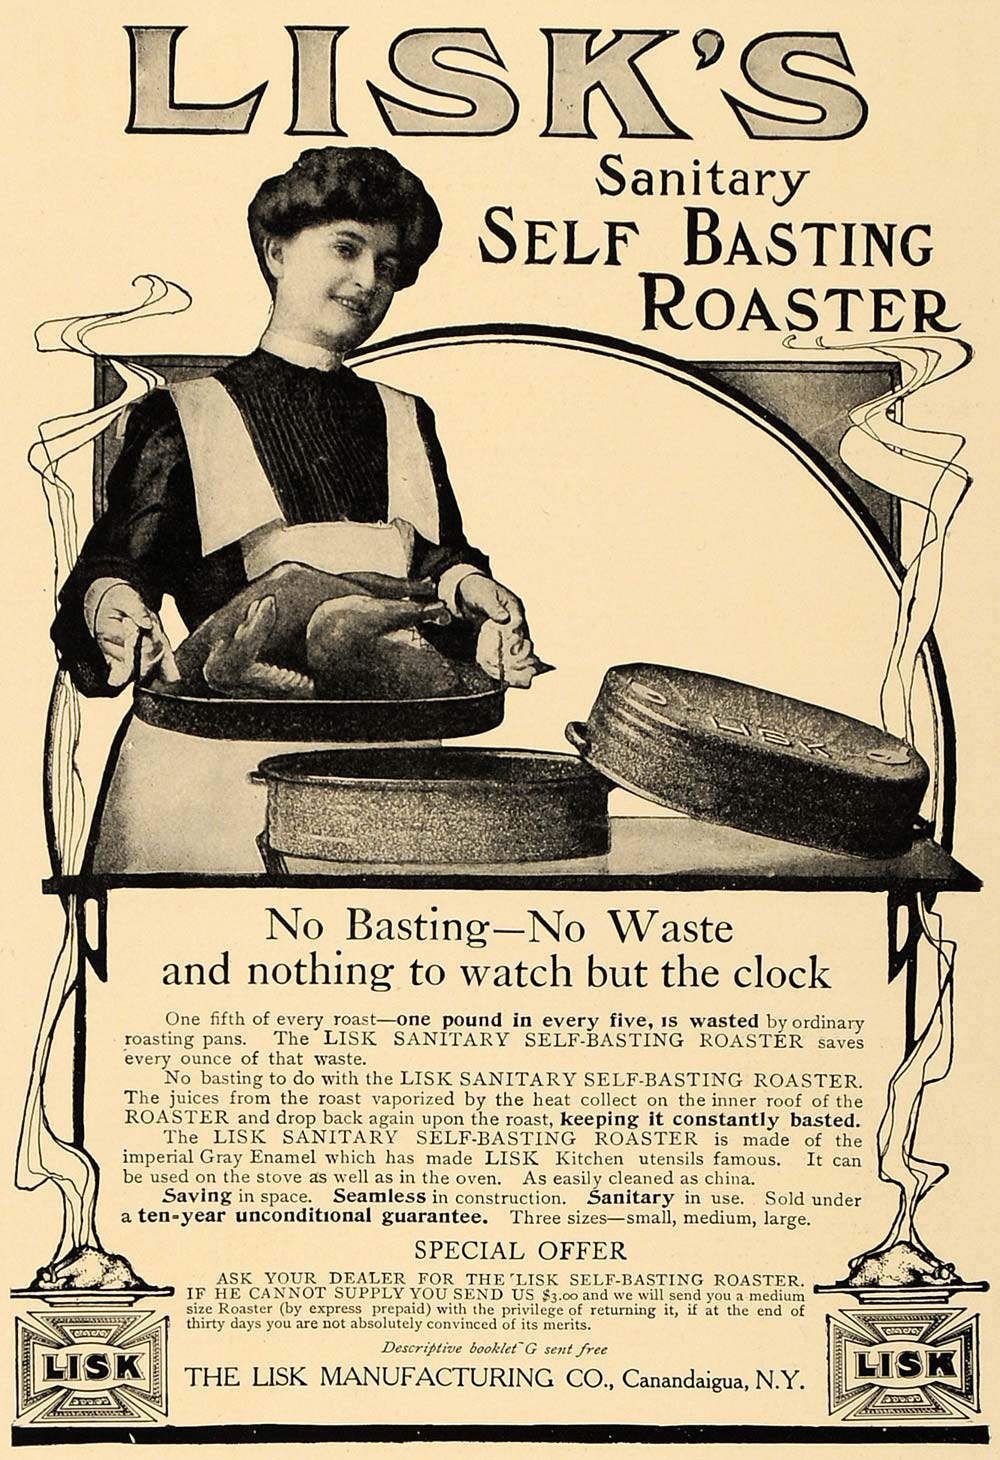 1906 Ad Lisk's Sanitary Self Basting Roaster Baking NY - ORIGINAL CL4